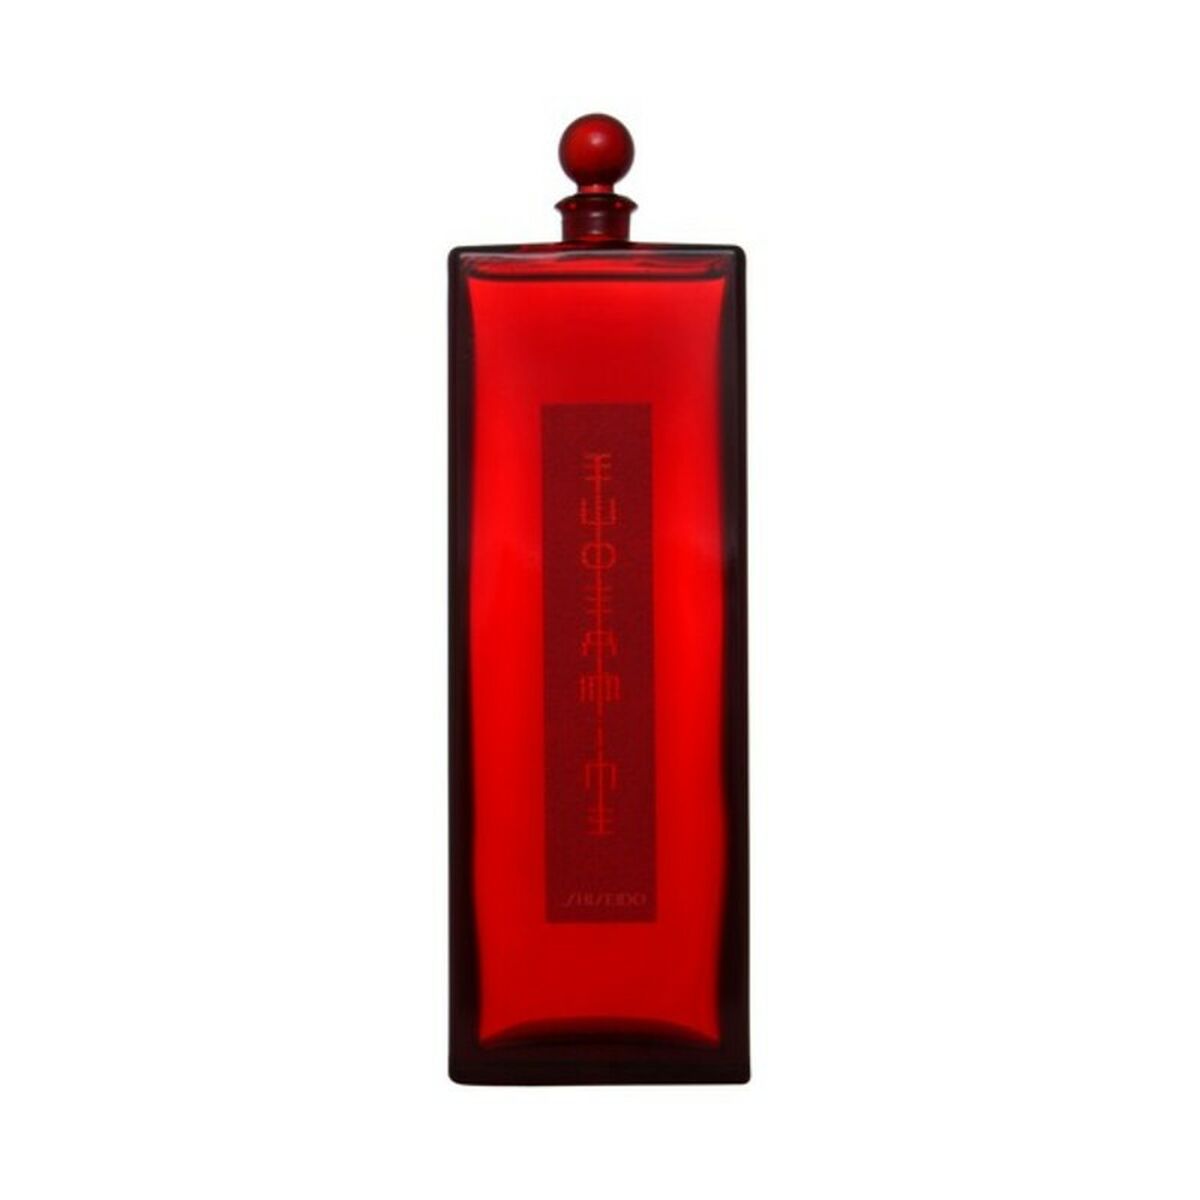 Moisturising and Revitalising Lotion Shiseido 125 ml